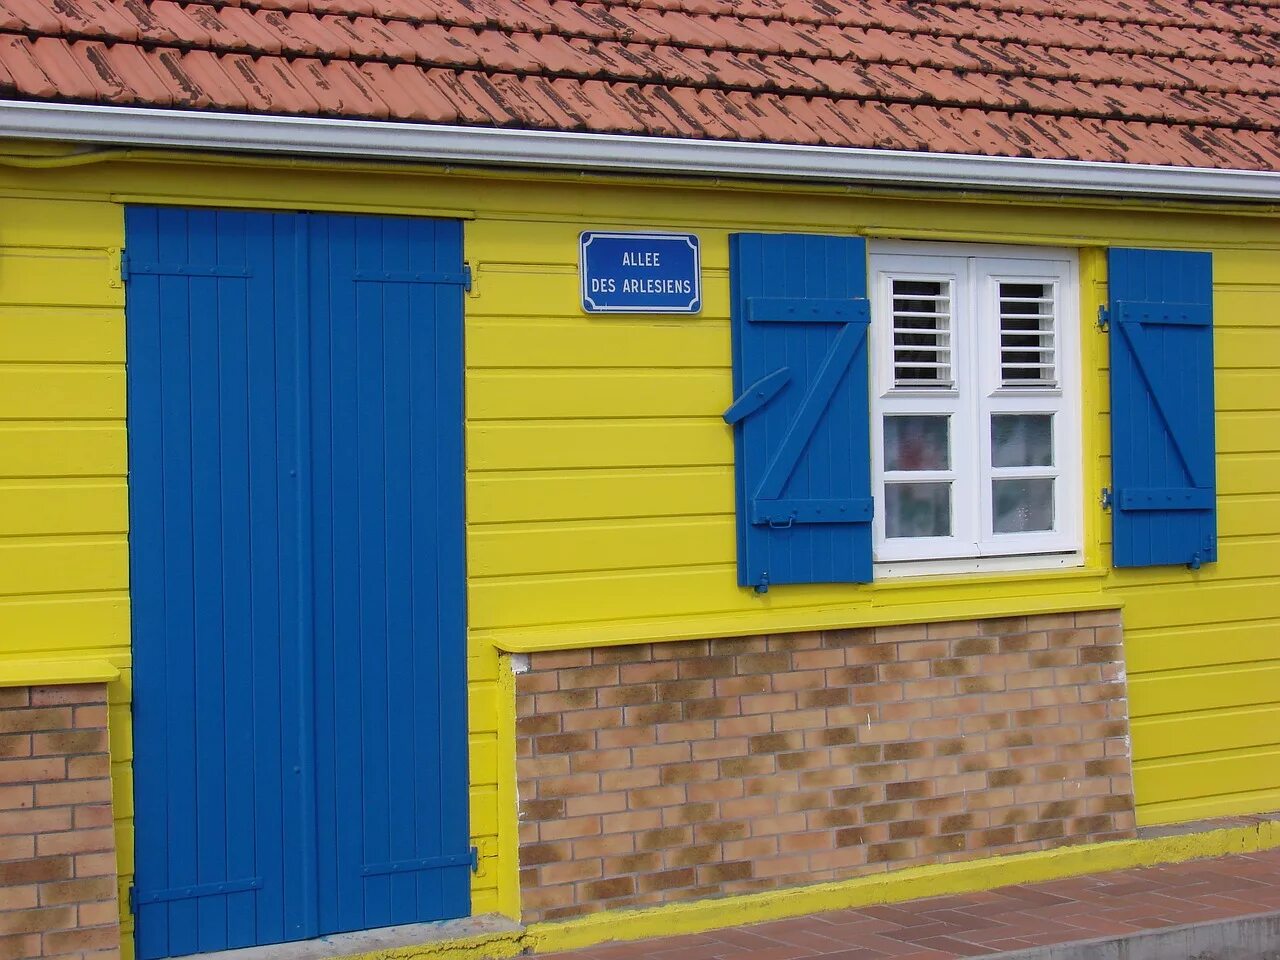 Желто синий домик. Желтый домик. Желтый дом с синей крышей. Желто синий дом. Желто голубой дачный домик.